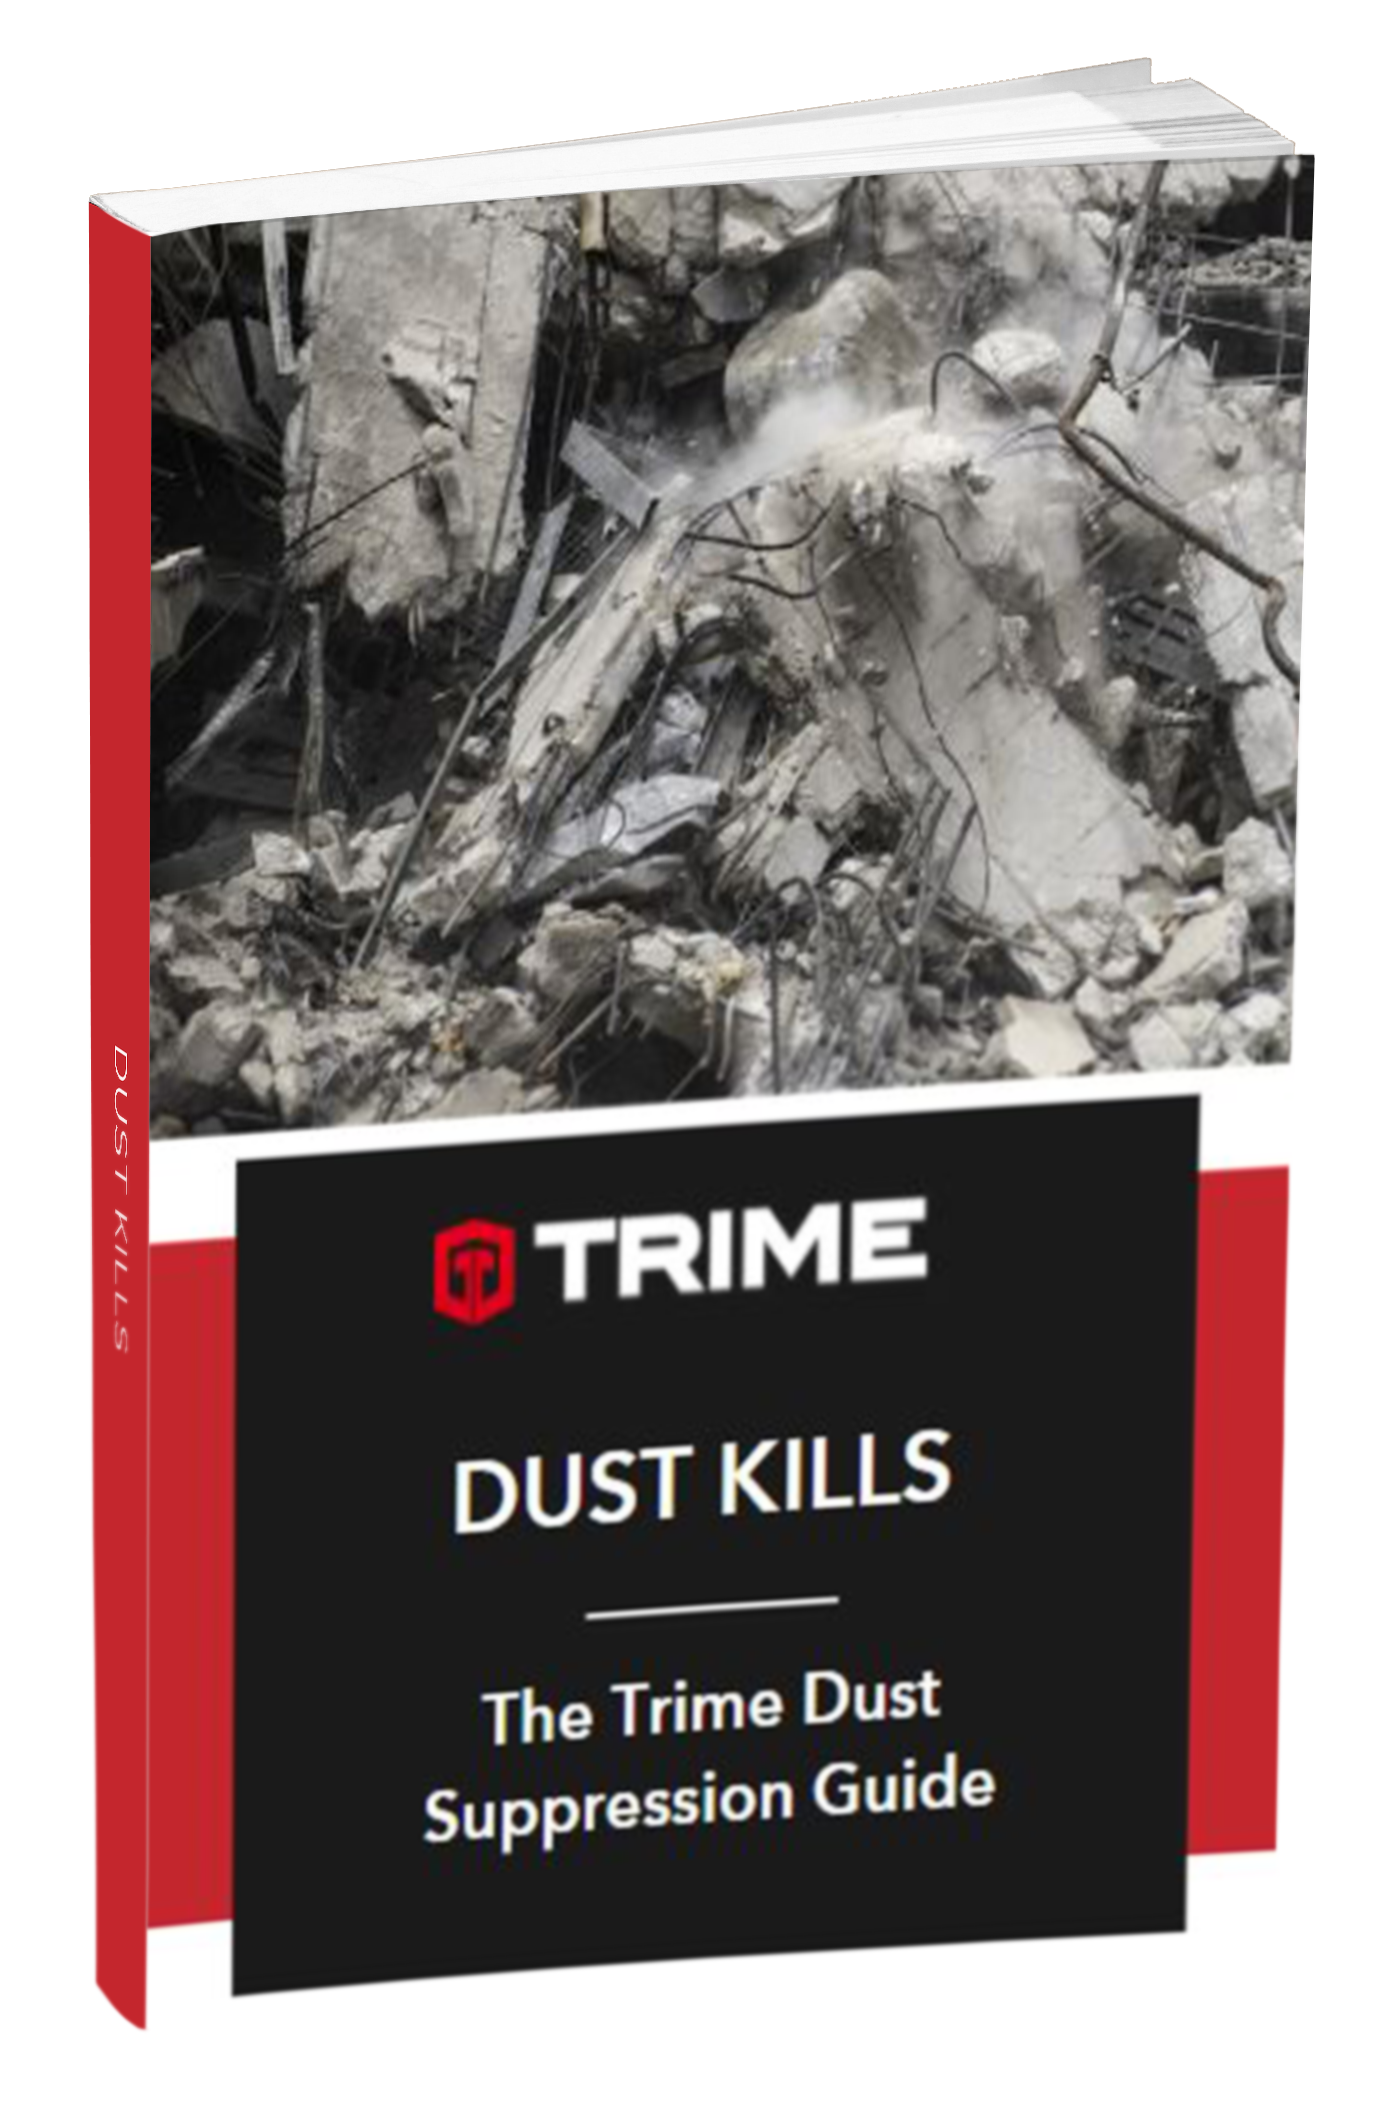 dust kills png mock up-2